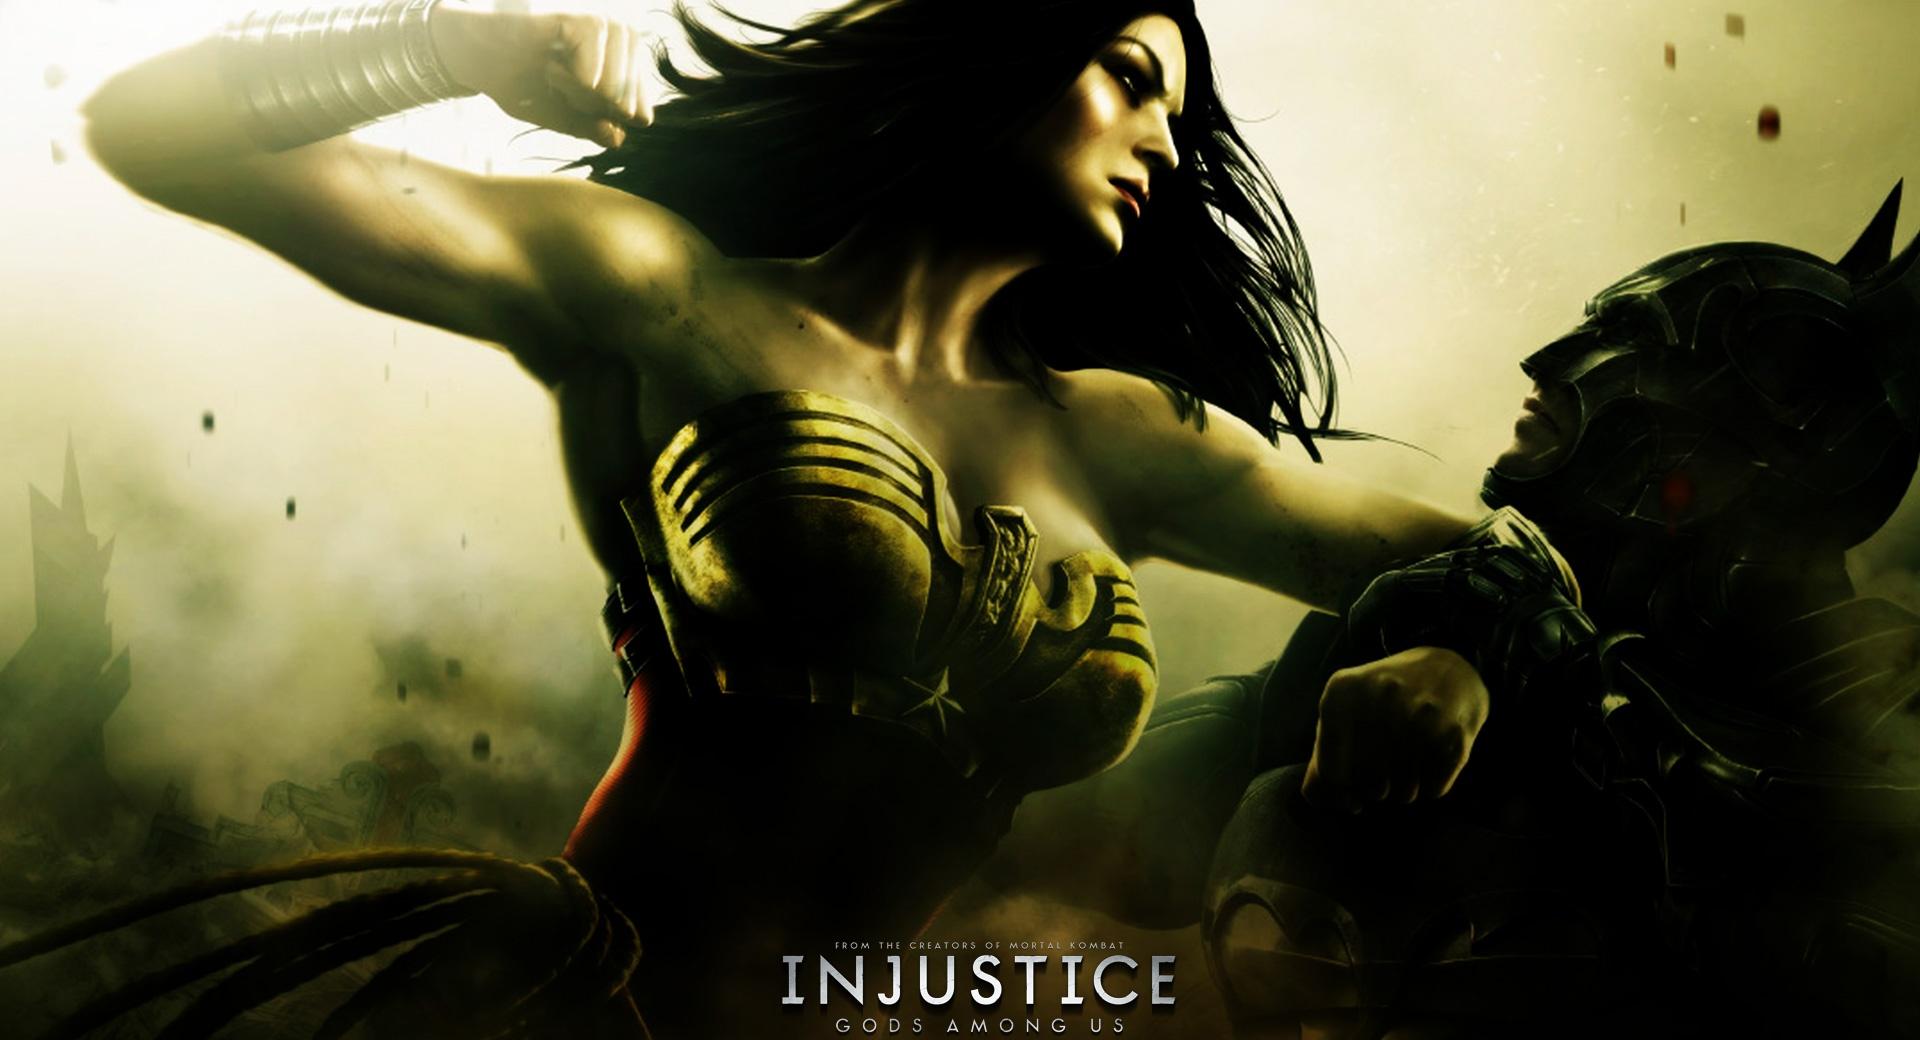 Injustice Gods Among Us - Batman vs Wonder Woman at 1280 x 960 size wallpapers HD quality